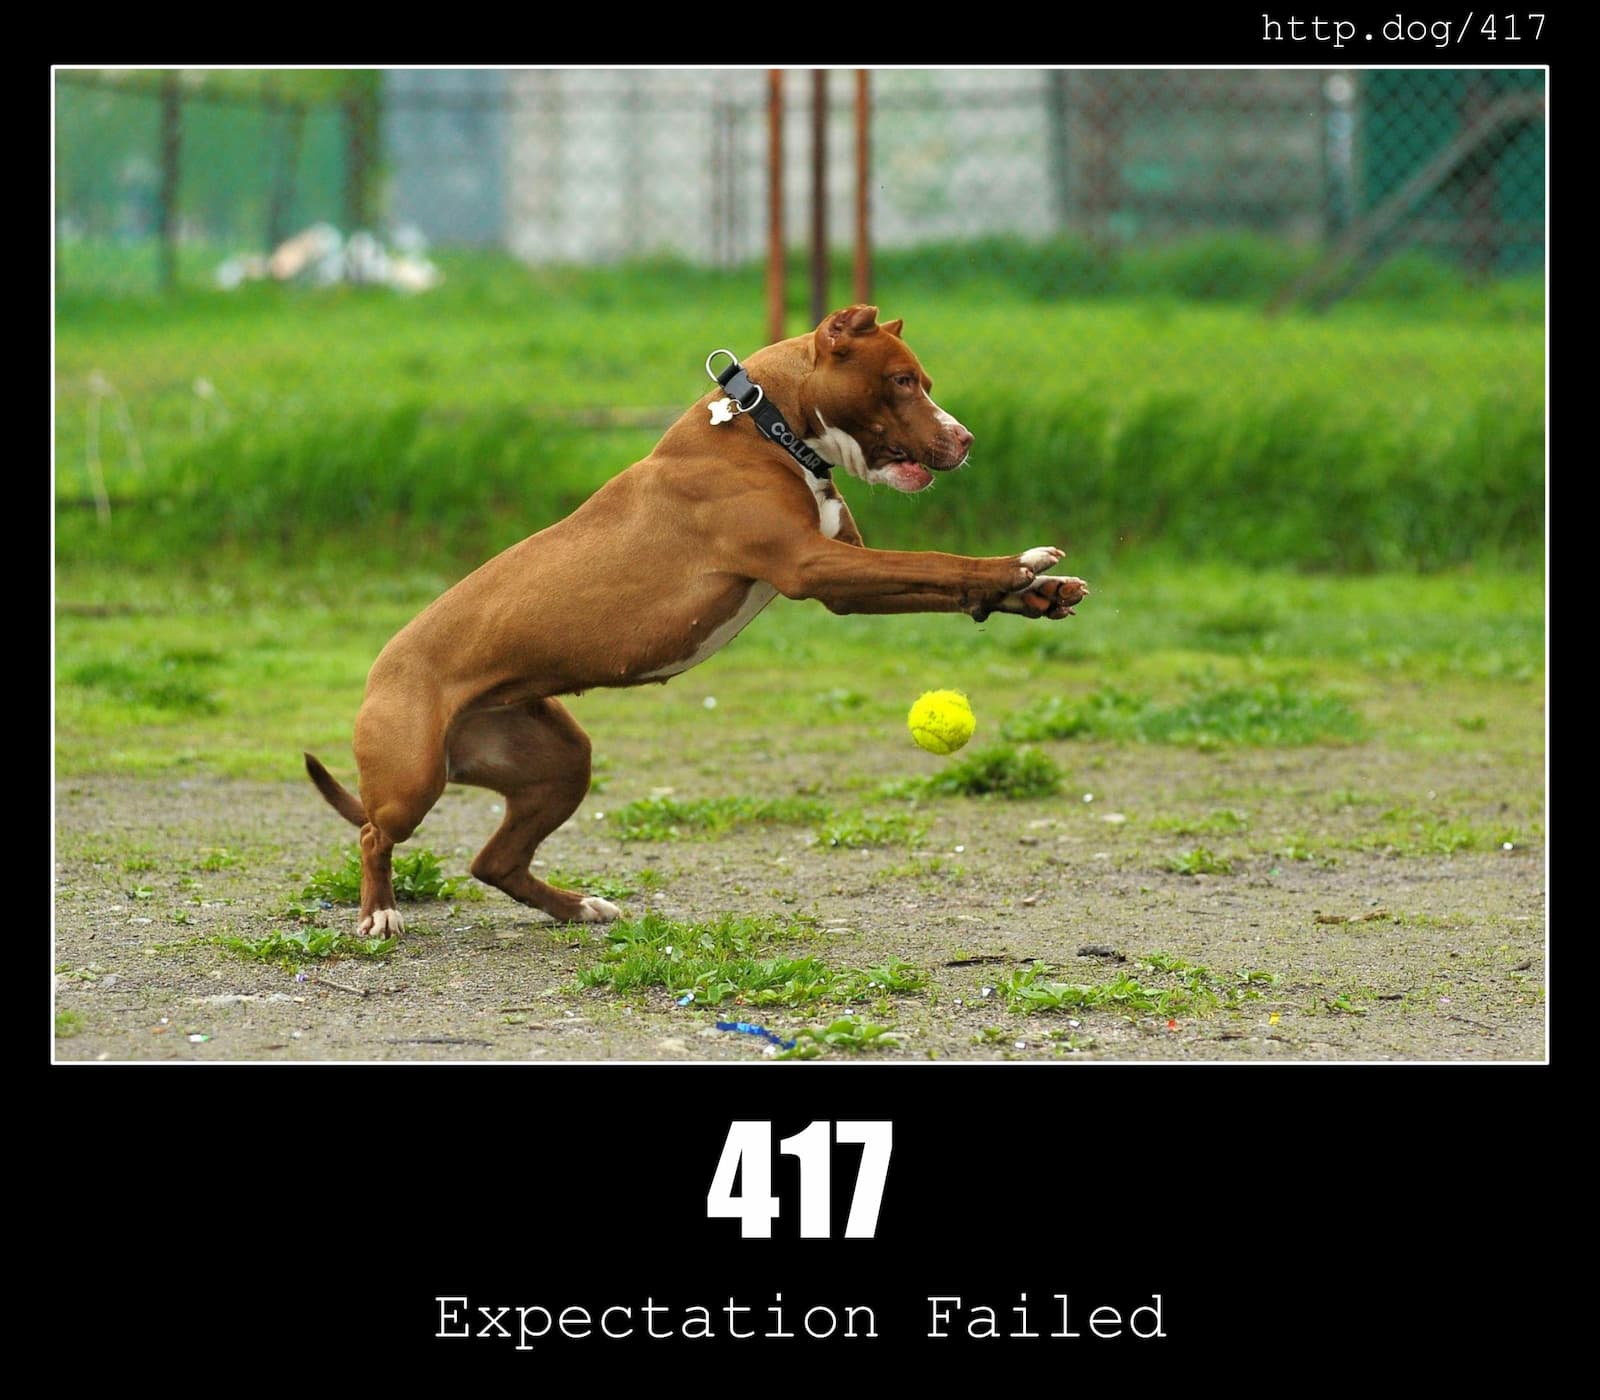 HTTP Status Code 417 Expectation Failed